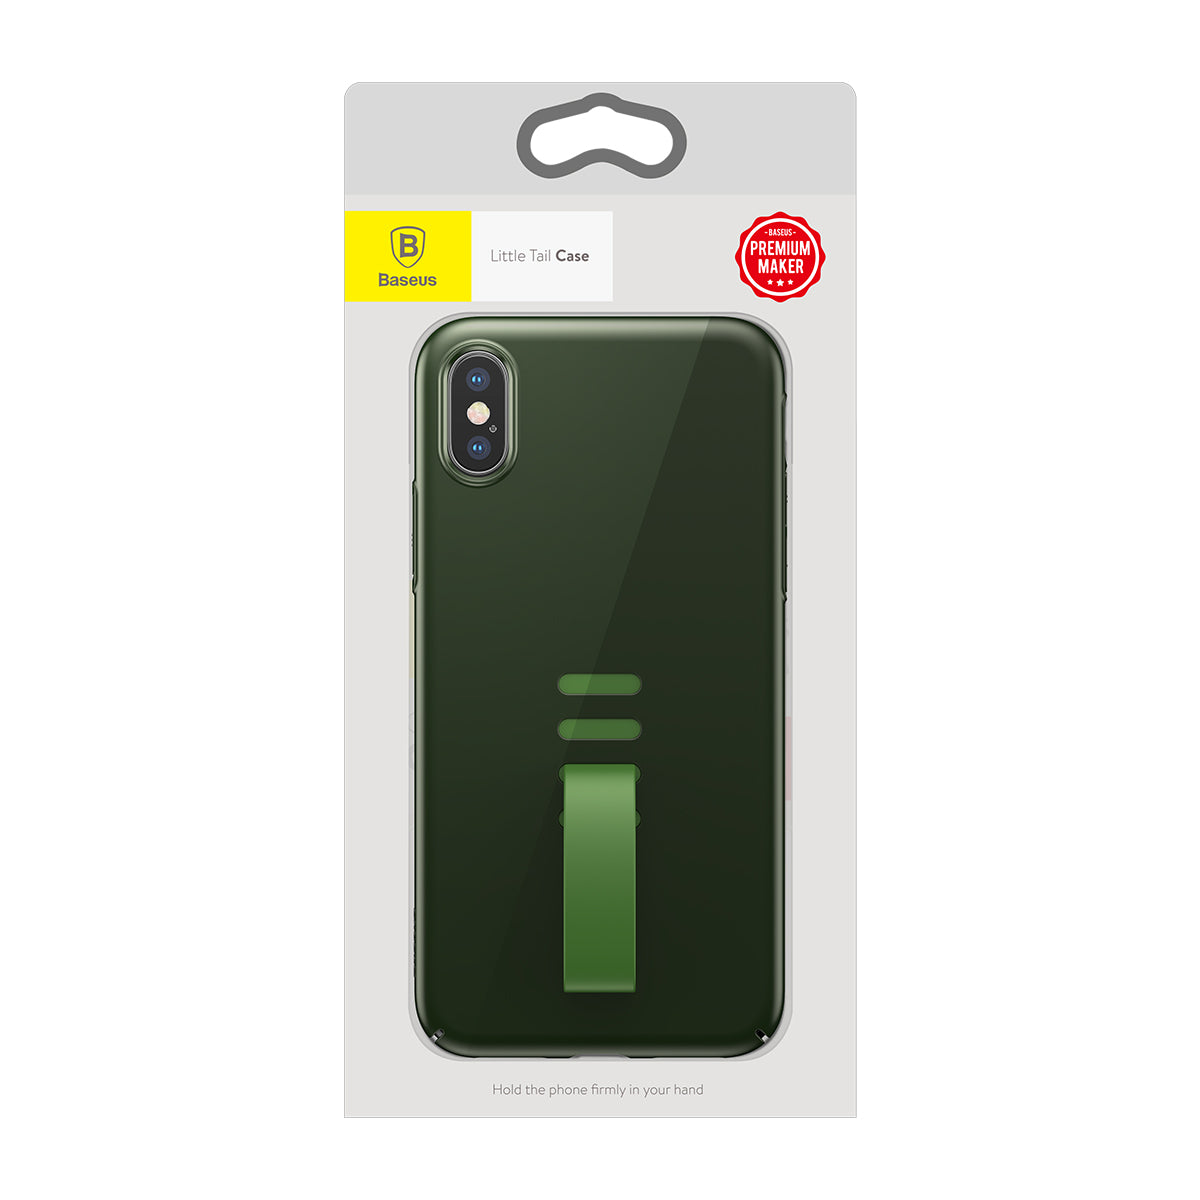 iPhone-X-Baseus-Little-Tail-Case-Green-Packaging_RZJGV37WADO0.jpg